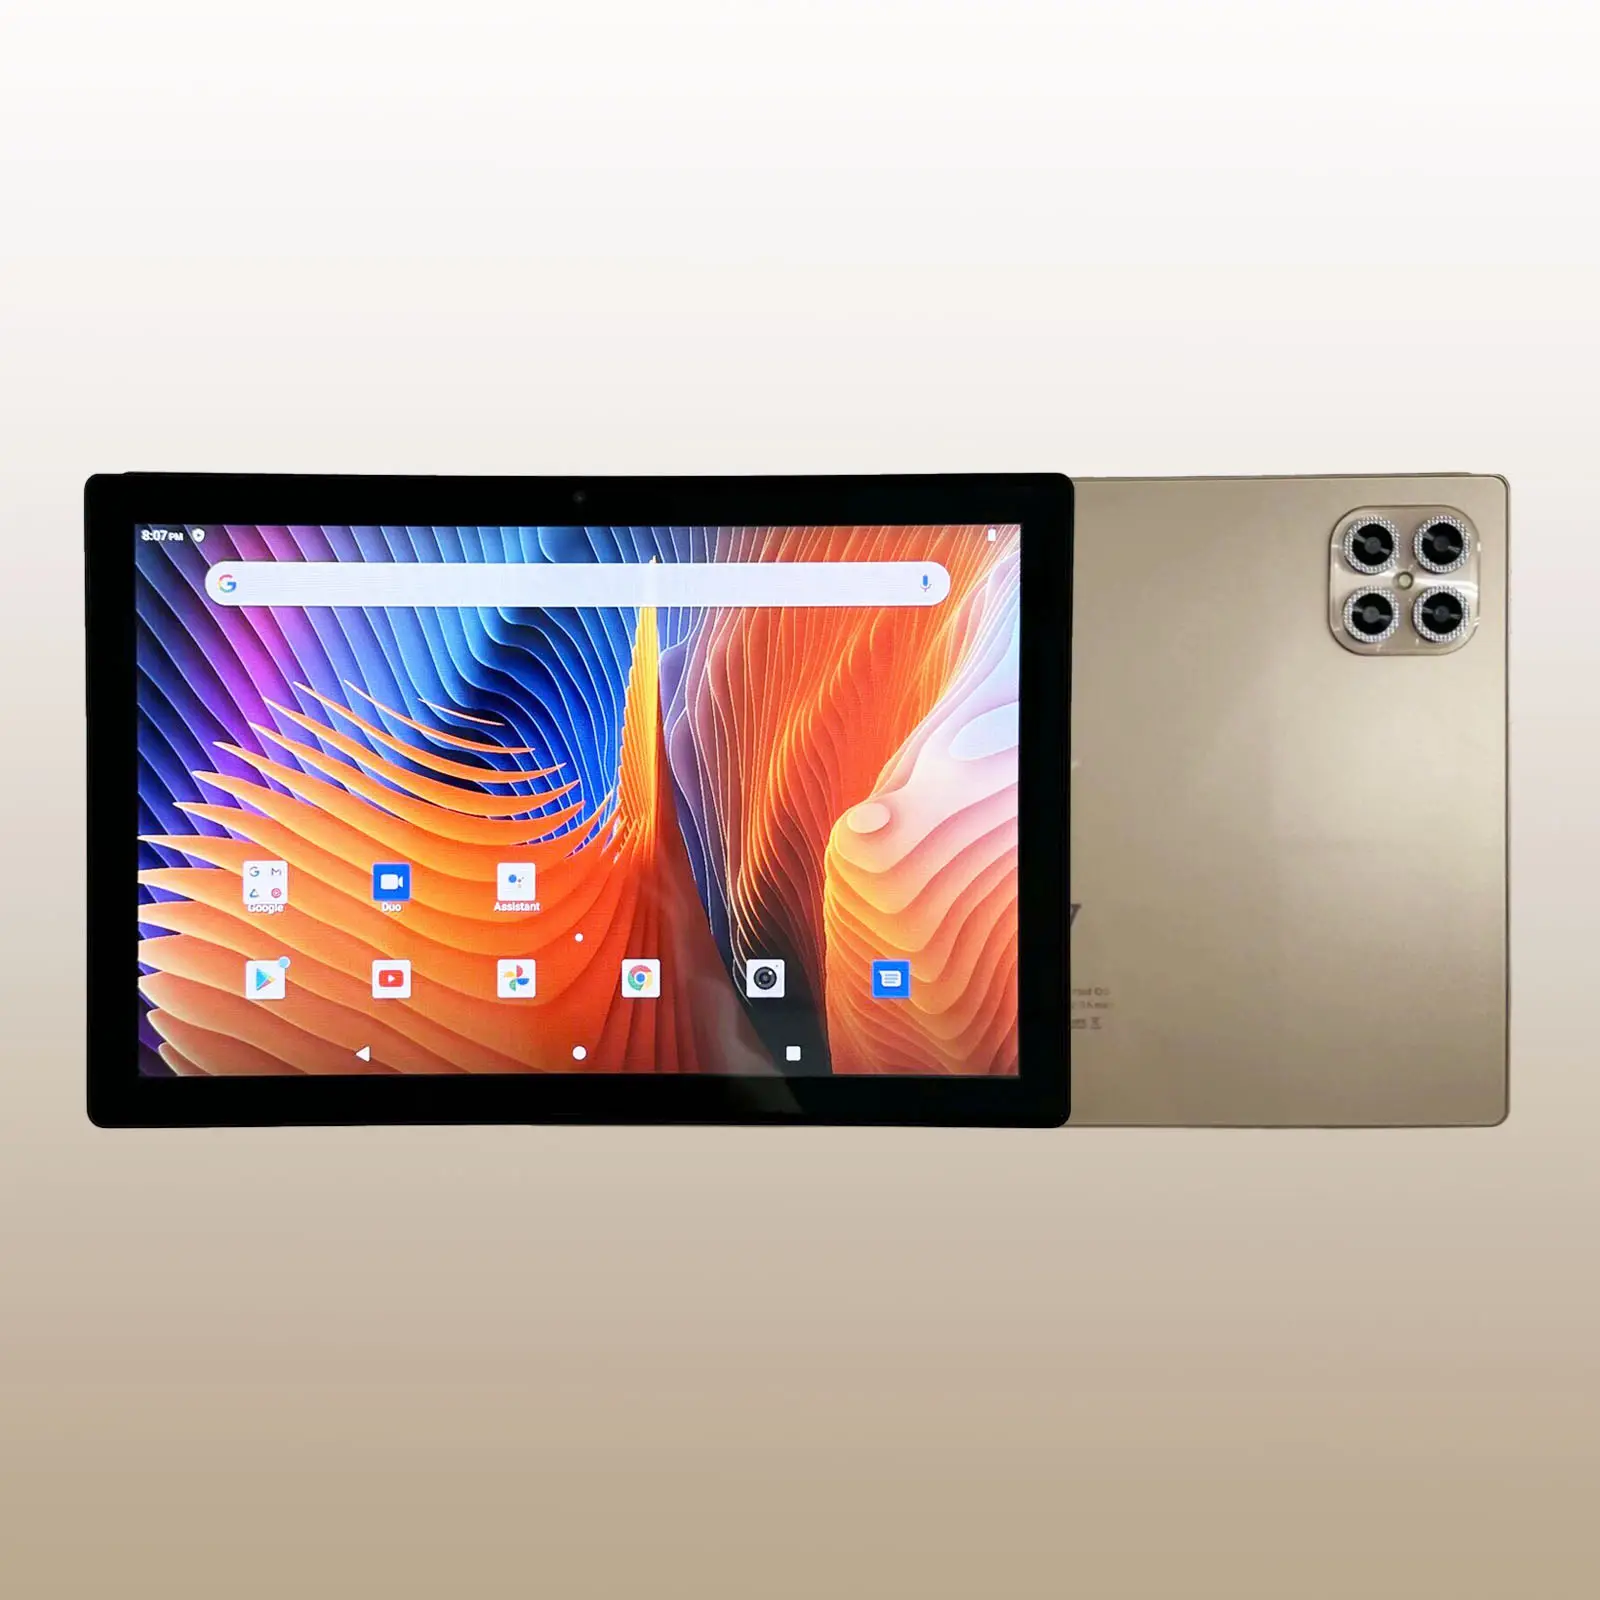 Kidiby all'ingrosso OEM ODM robusto Tablet Pc 10.1 pollici IPS Android 12 8GB + 256GB tavoletta Octa-Core per gioco educativo ufficio